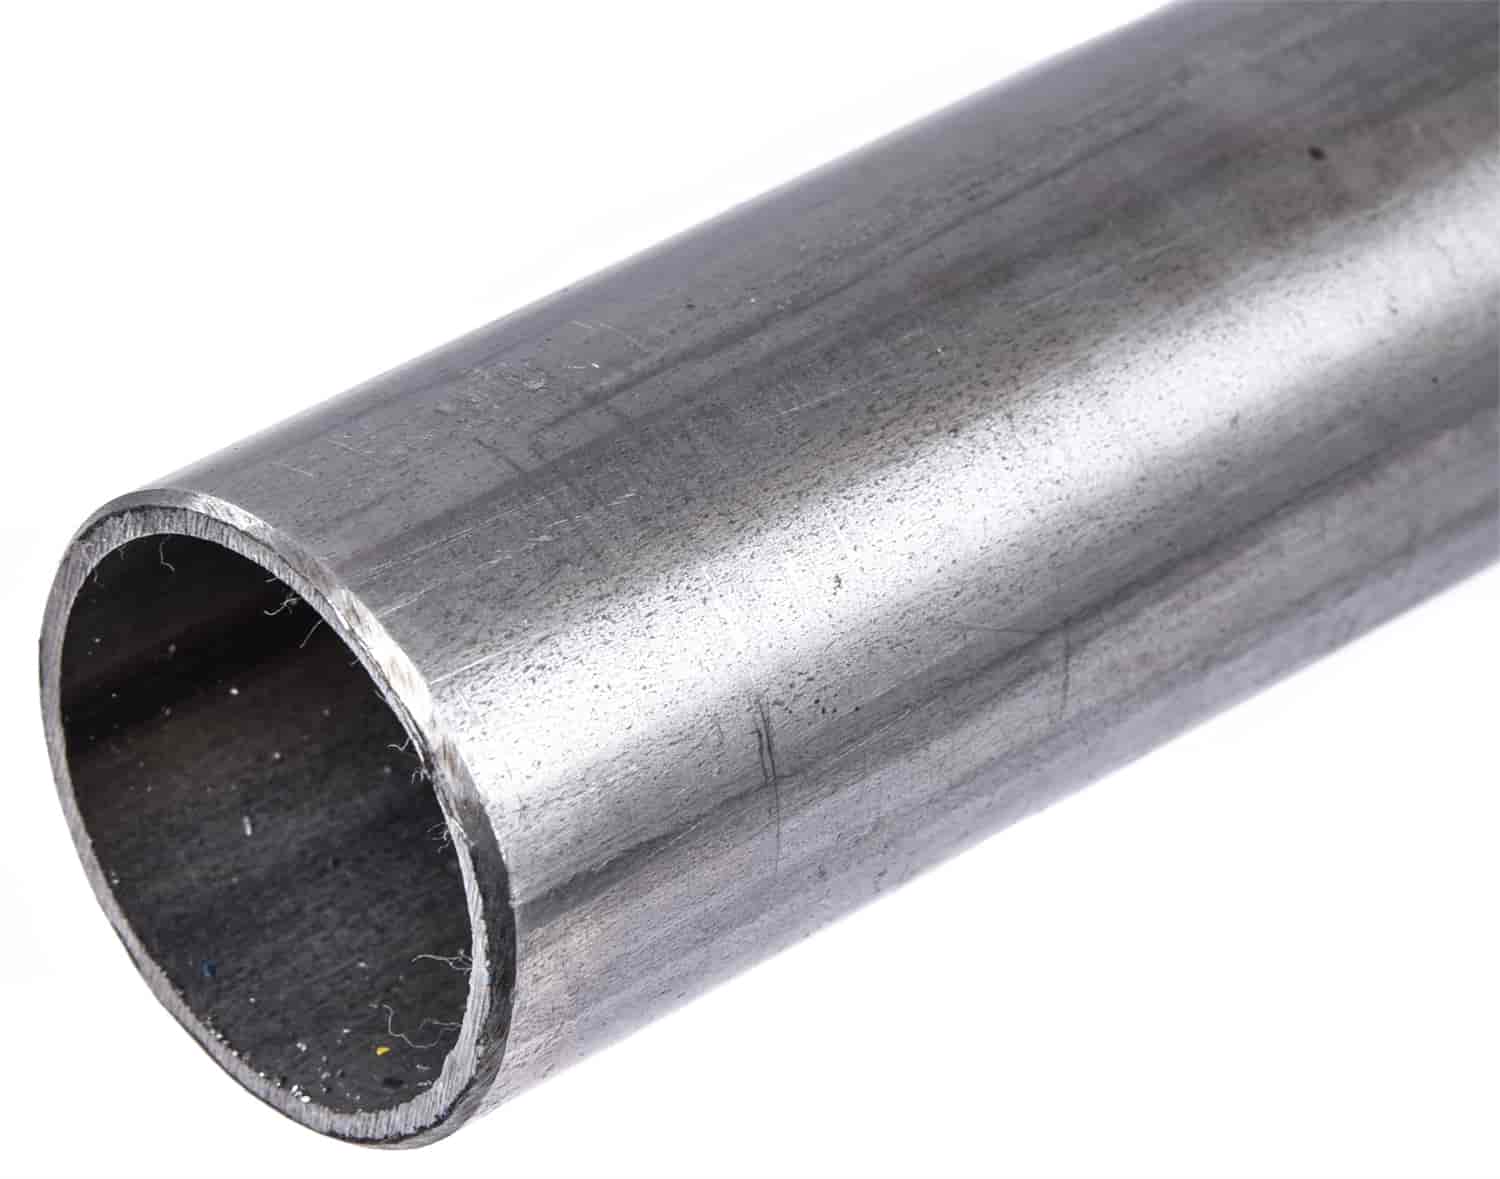 Mild Steel Tubing [Round, 1 1/4 in. Diameter